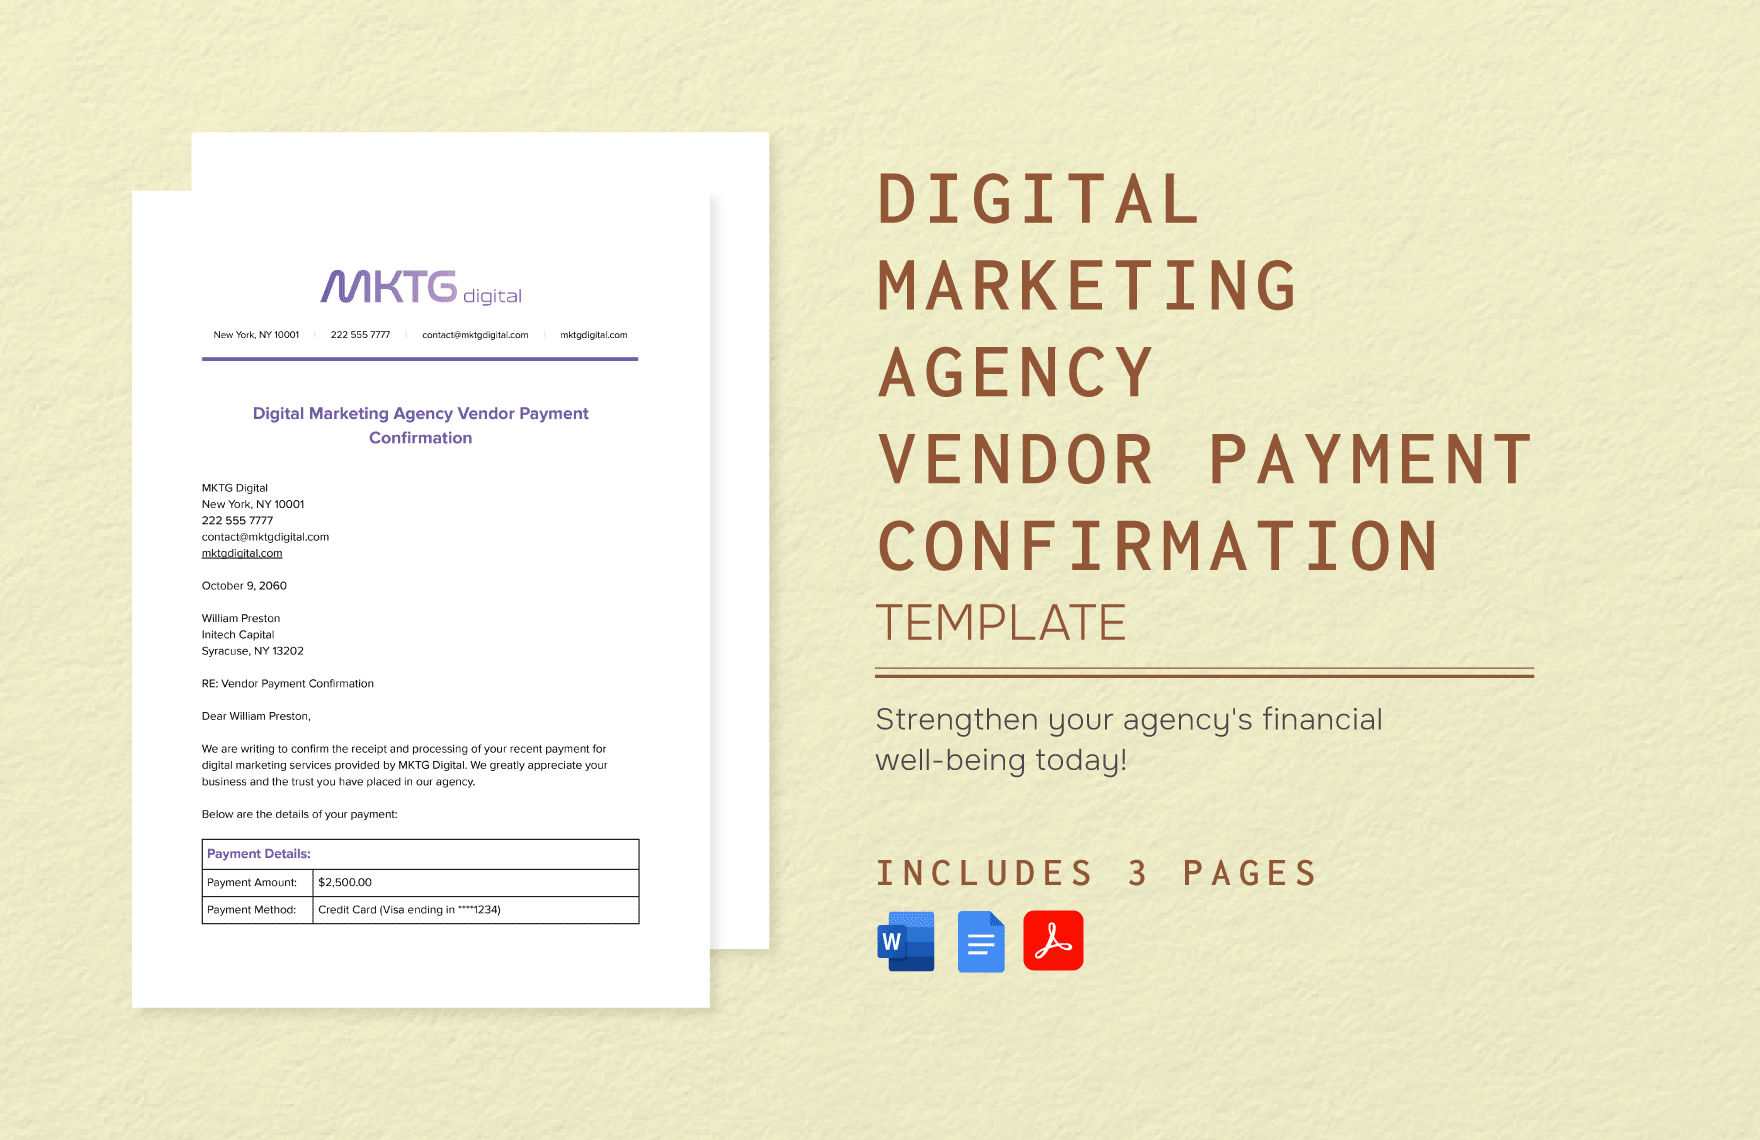 Digital Marketing Agency Vendor Payment Confirmation Template